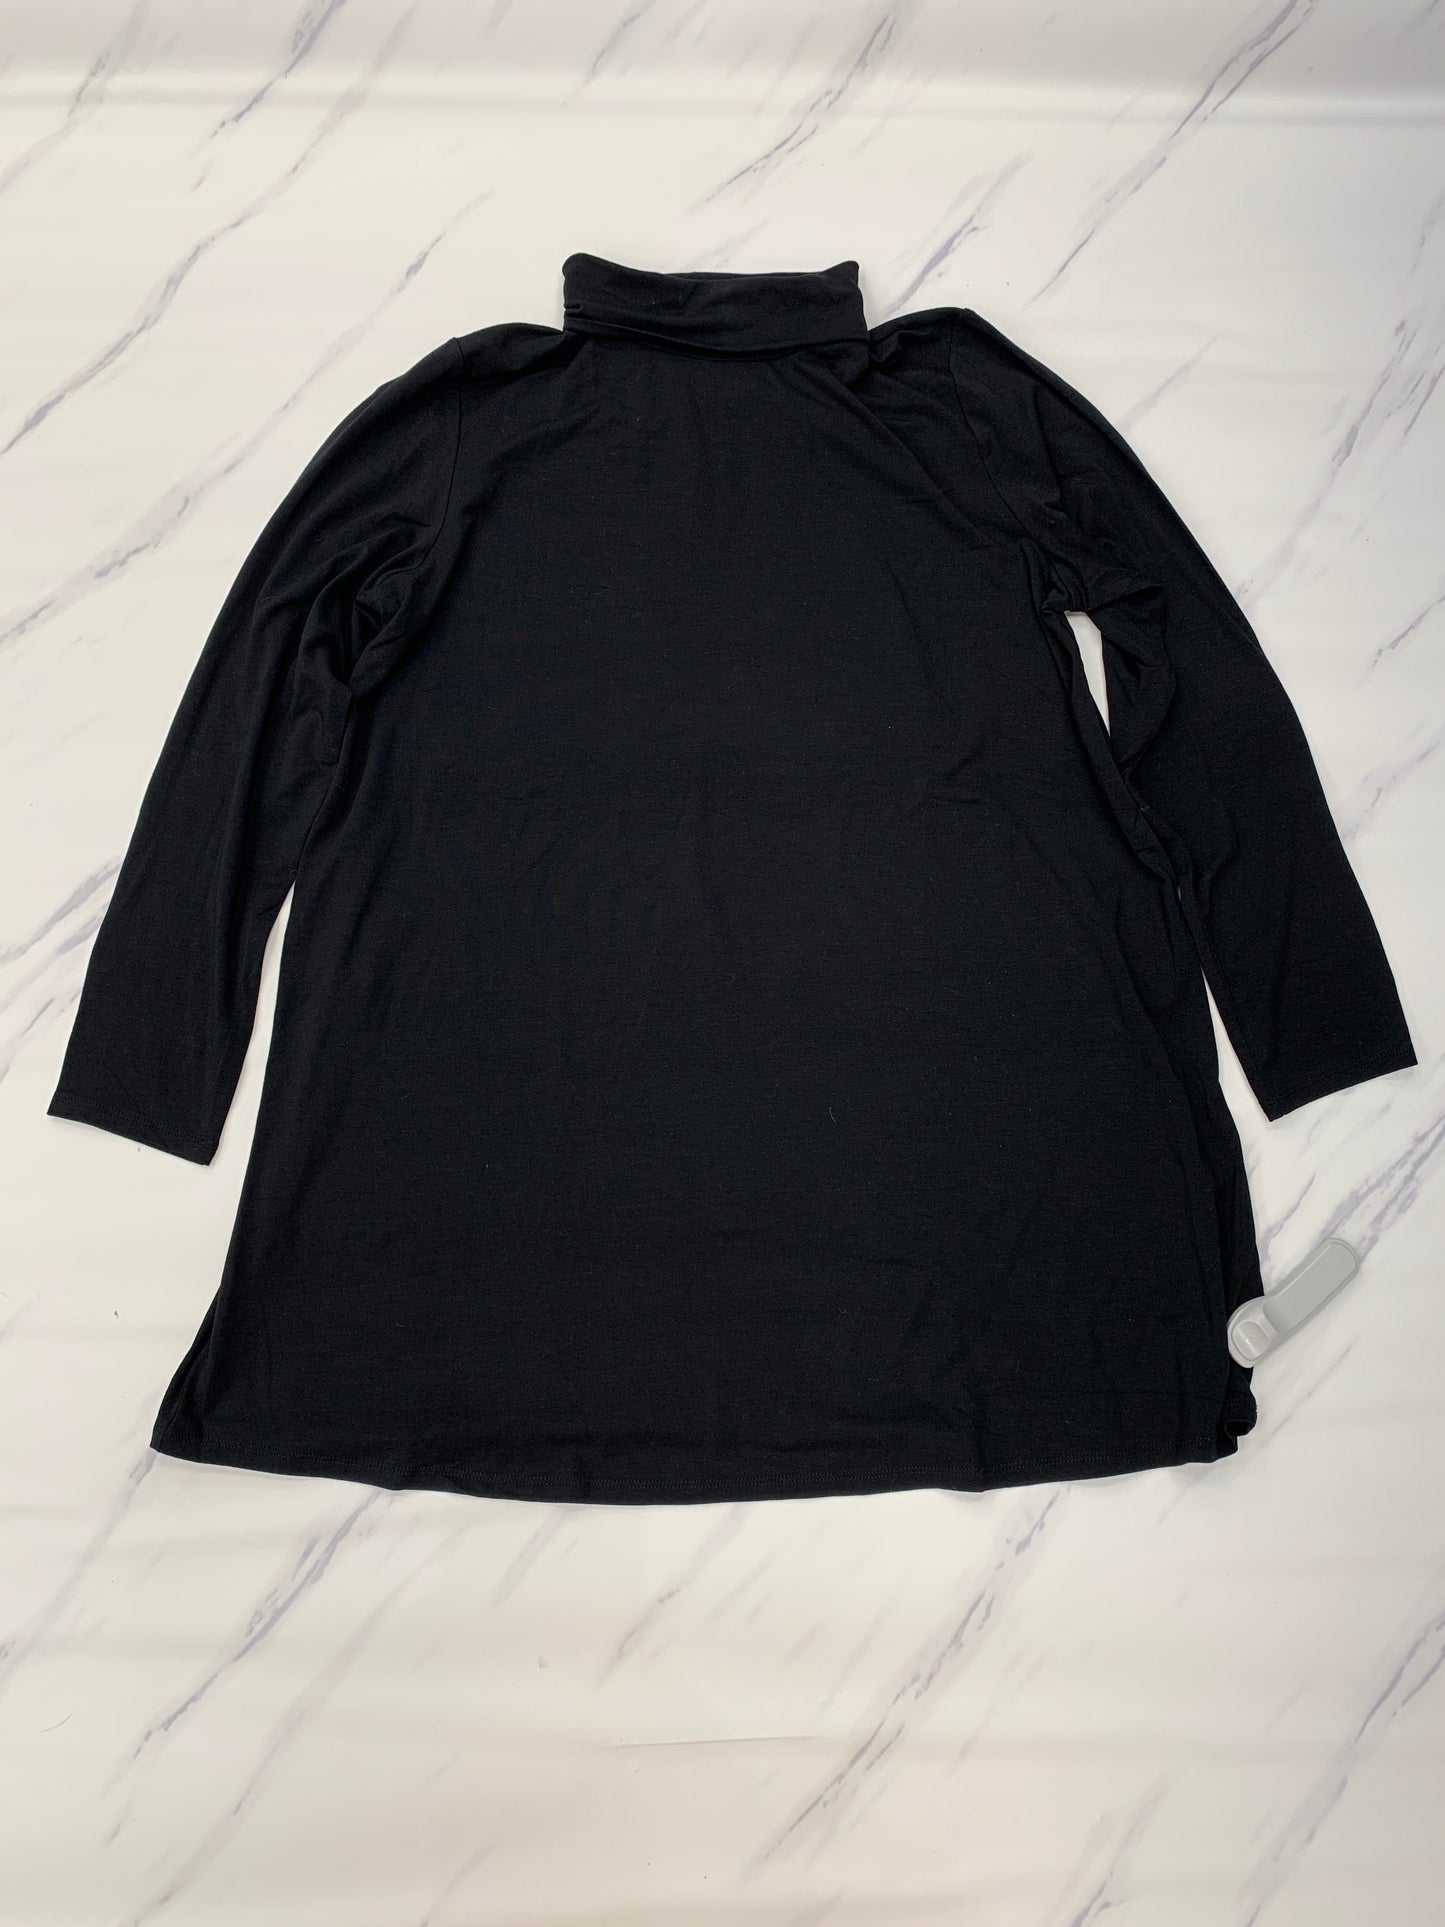 Black Top Long Sleeve Eileen Fisher, Size L